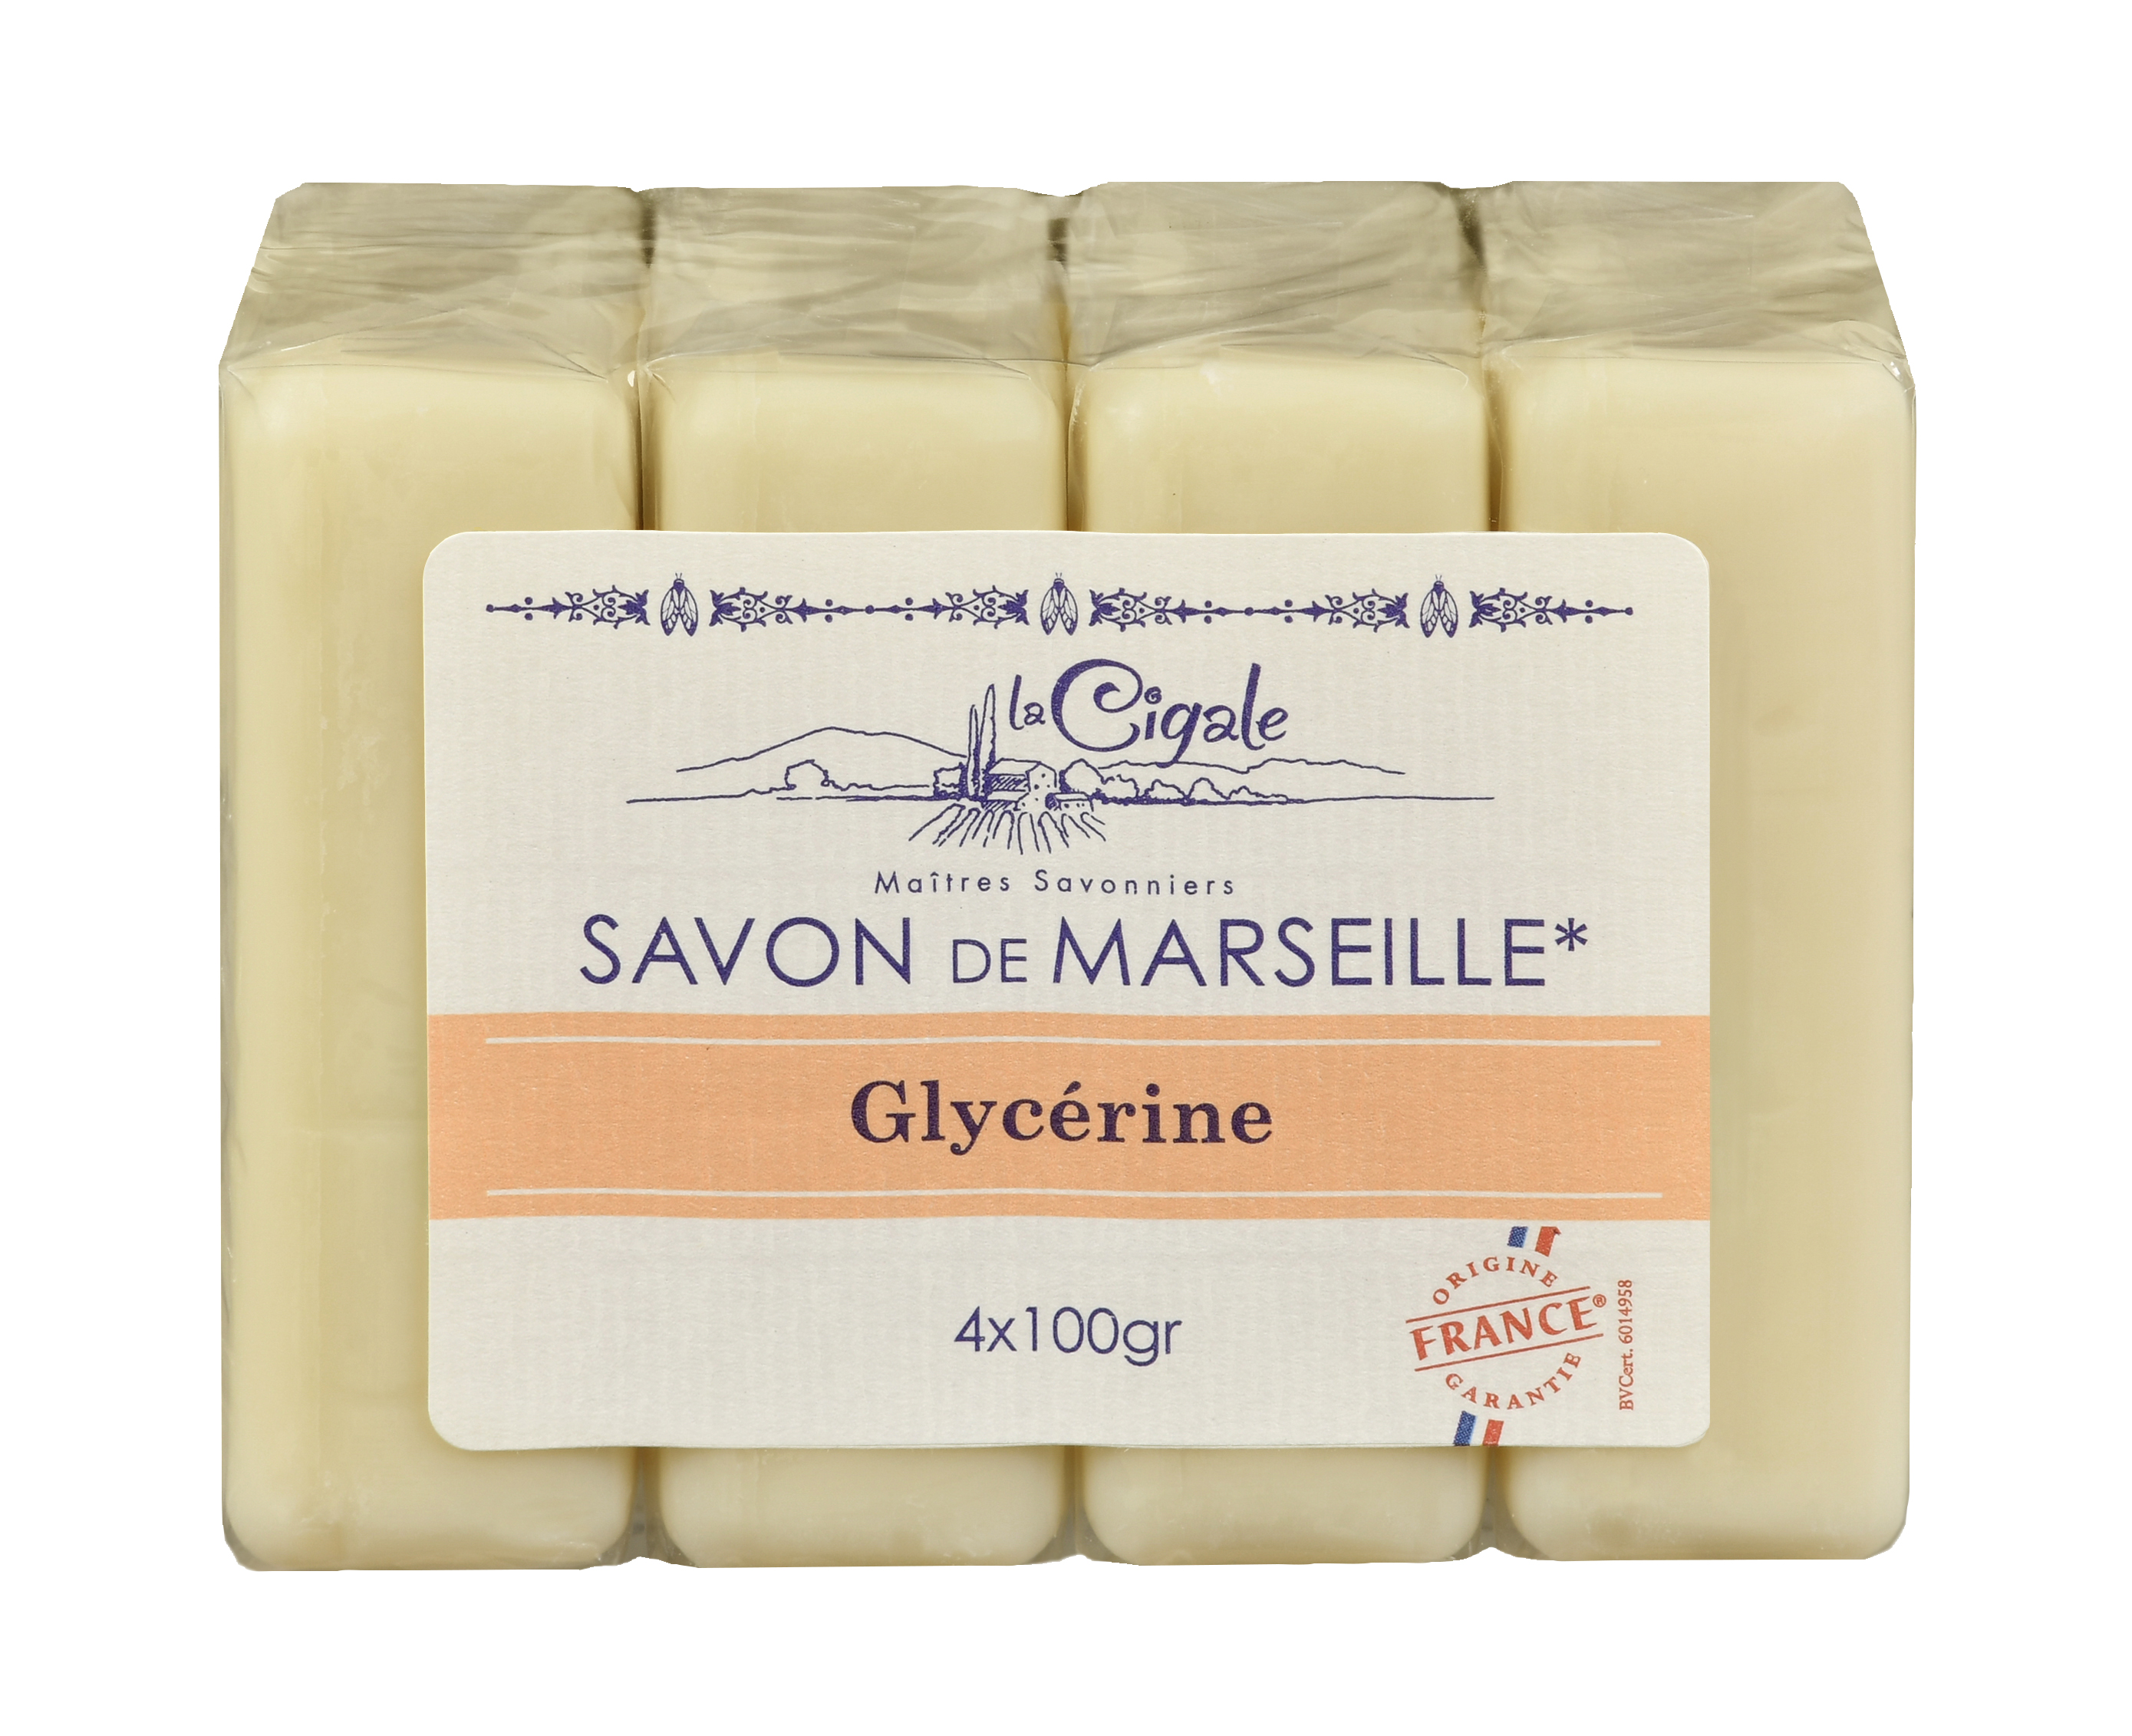 Cube de savon de Marseille à la glycérine 2x400g, La Cigale, Savon  multi-usage